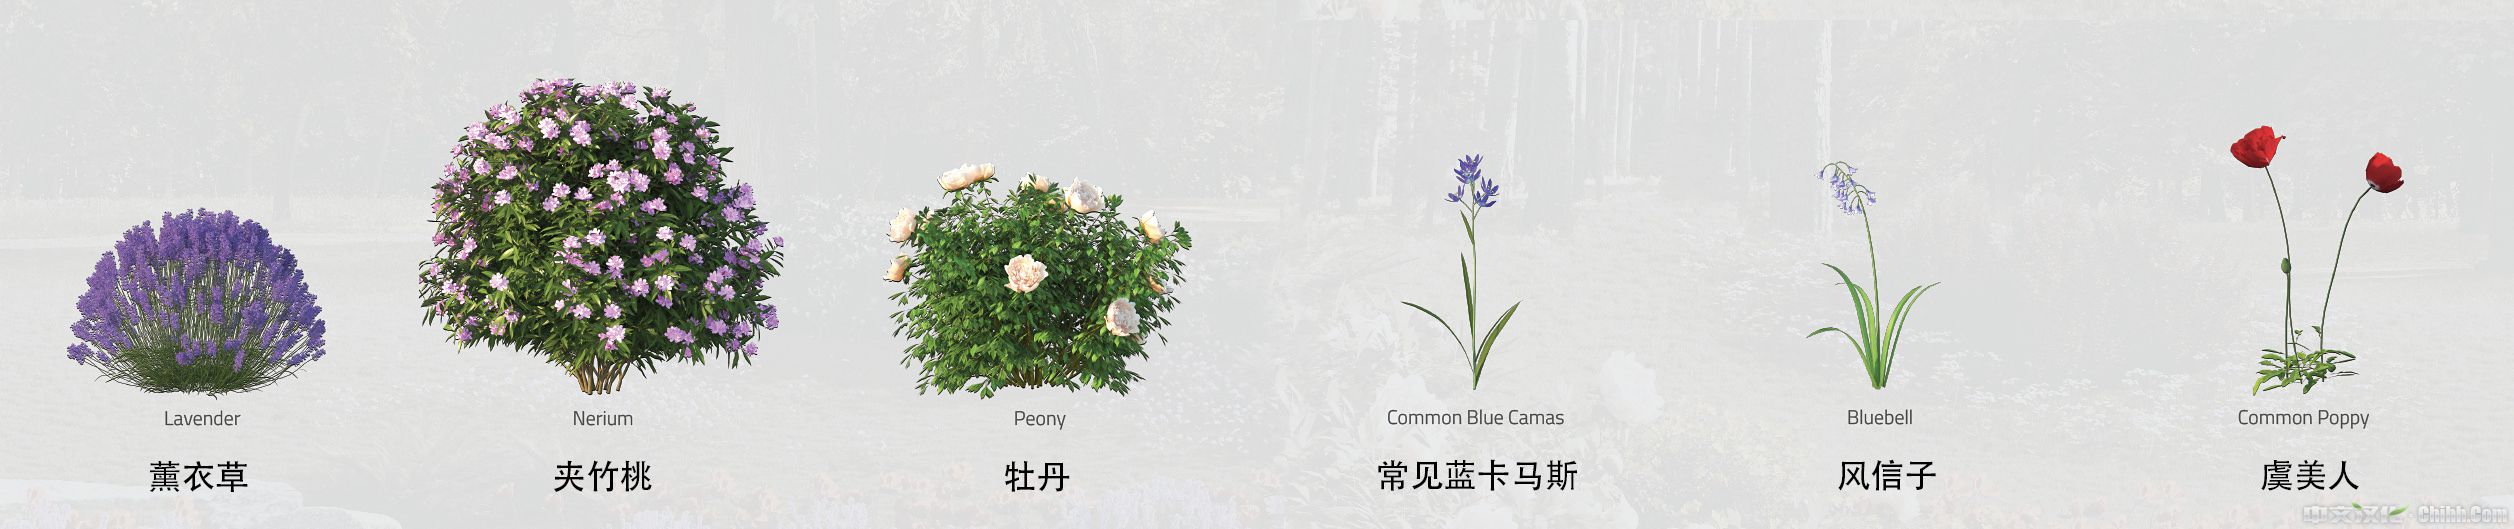 Flower_plant-02B.jpg